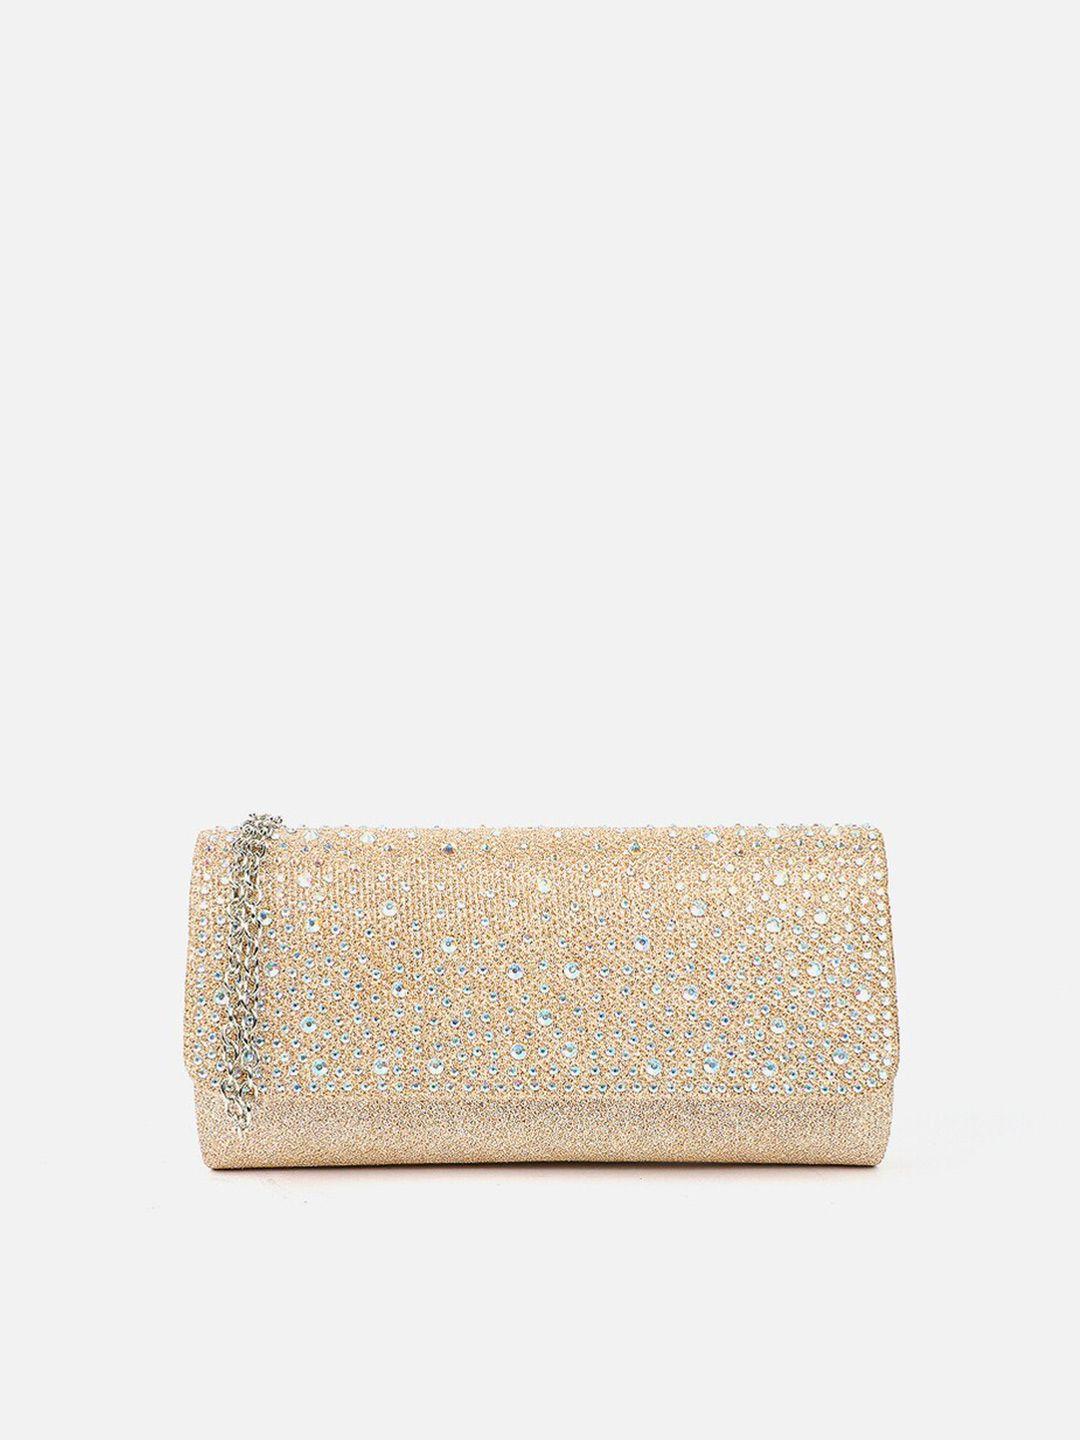 carlton london embellished purse clutch with shoulder strap